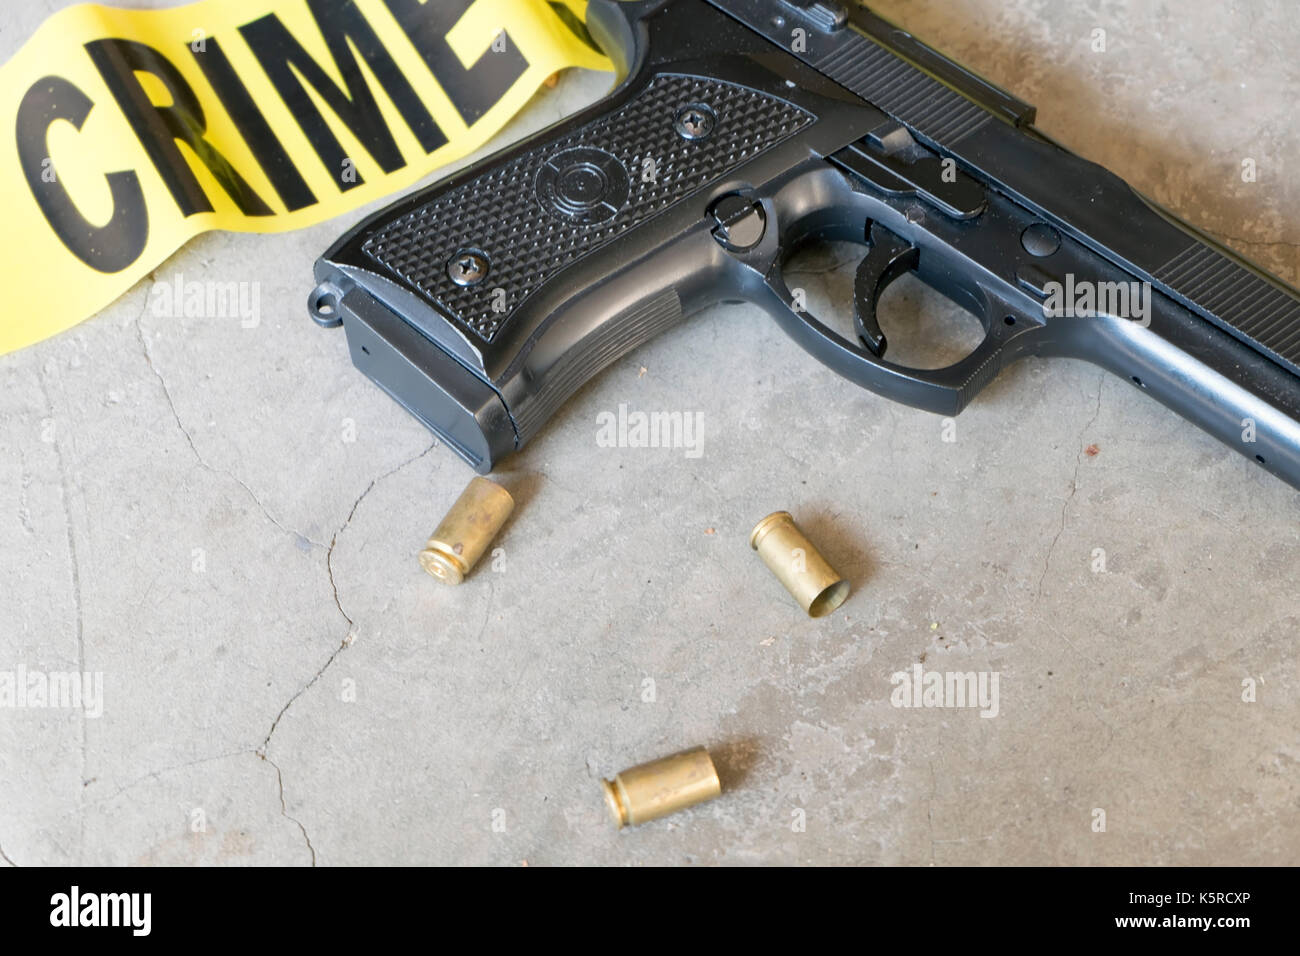 Crime scene concept with gun, crime scene tape and bullet casings Stock Photo